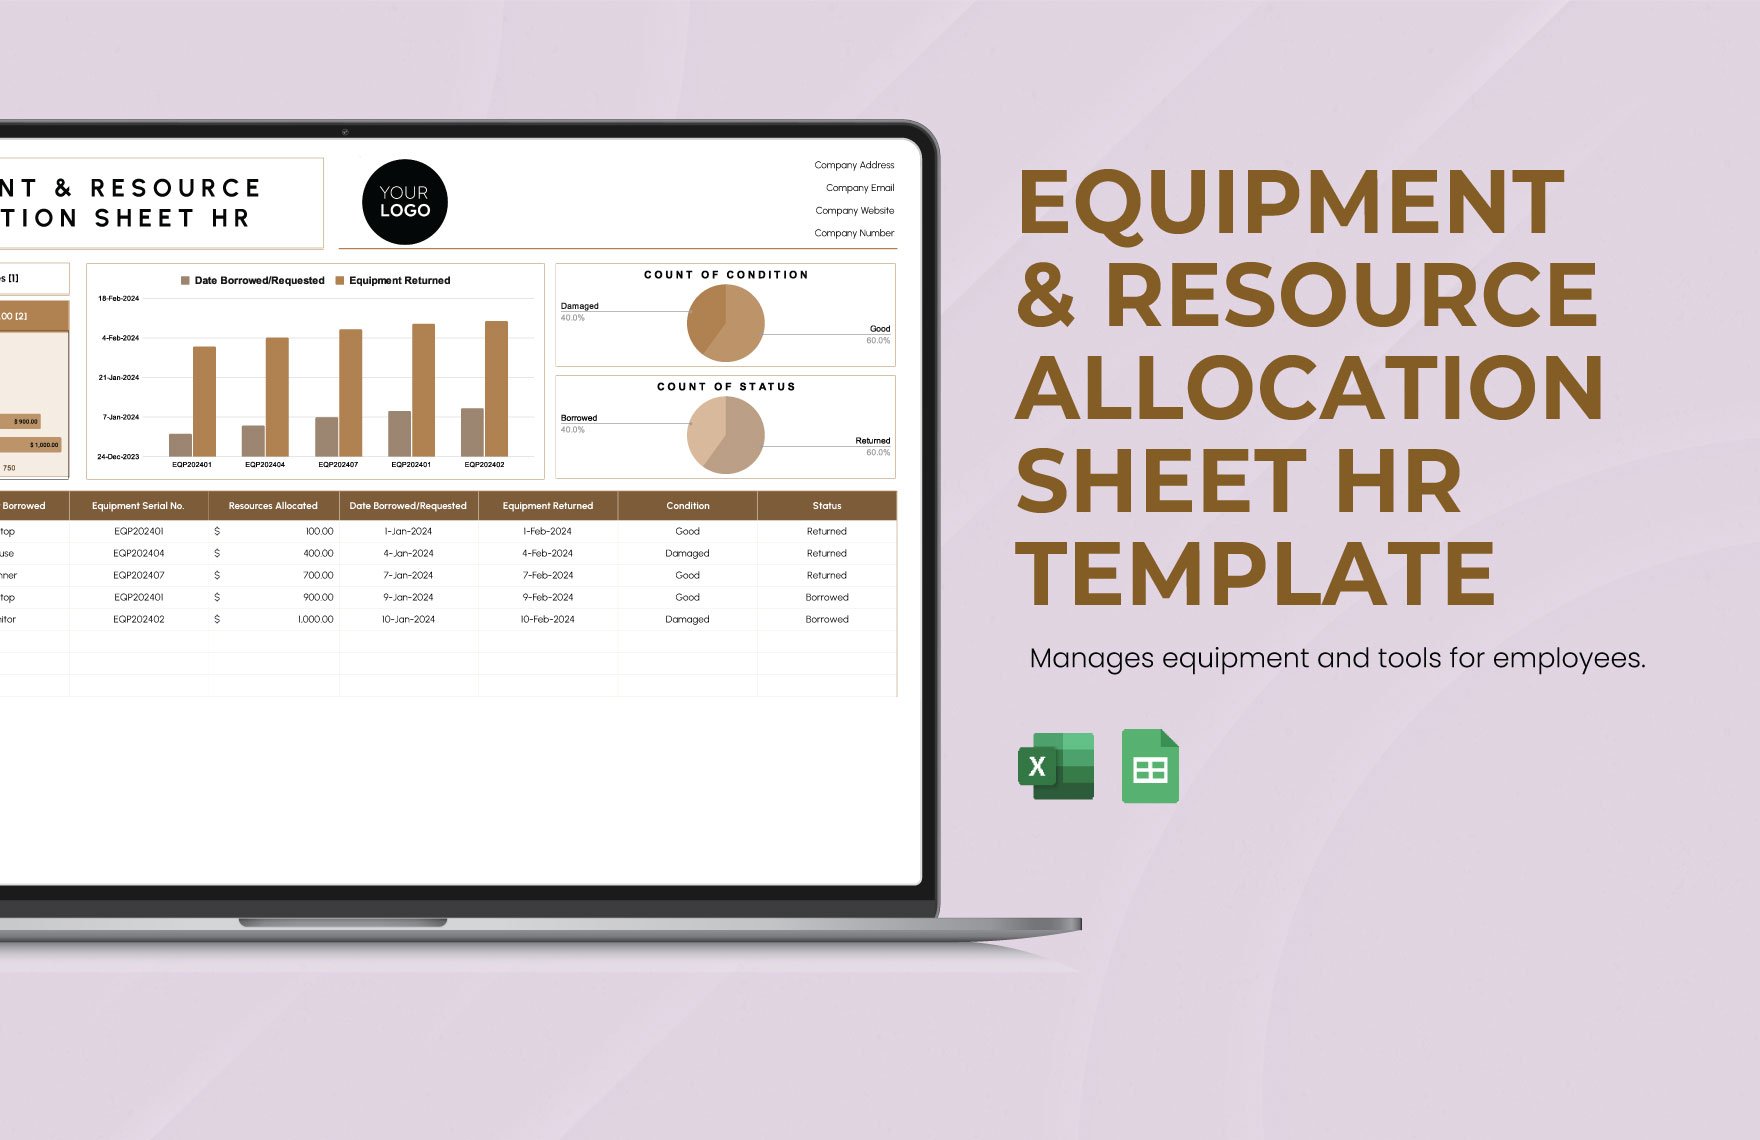 Equipment & Resource Allocation Sheet HR Template